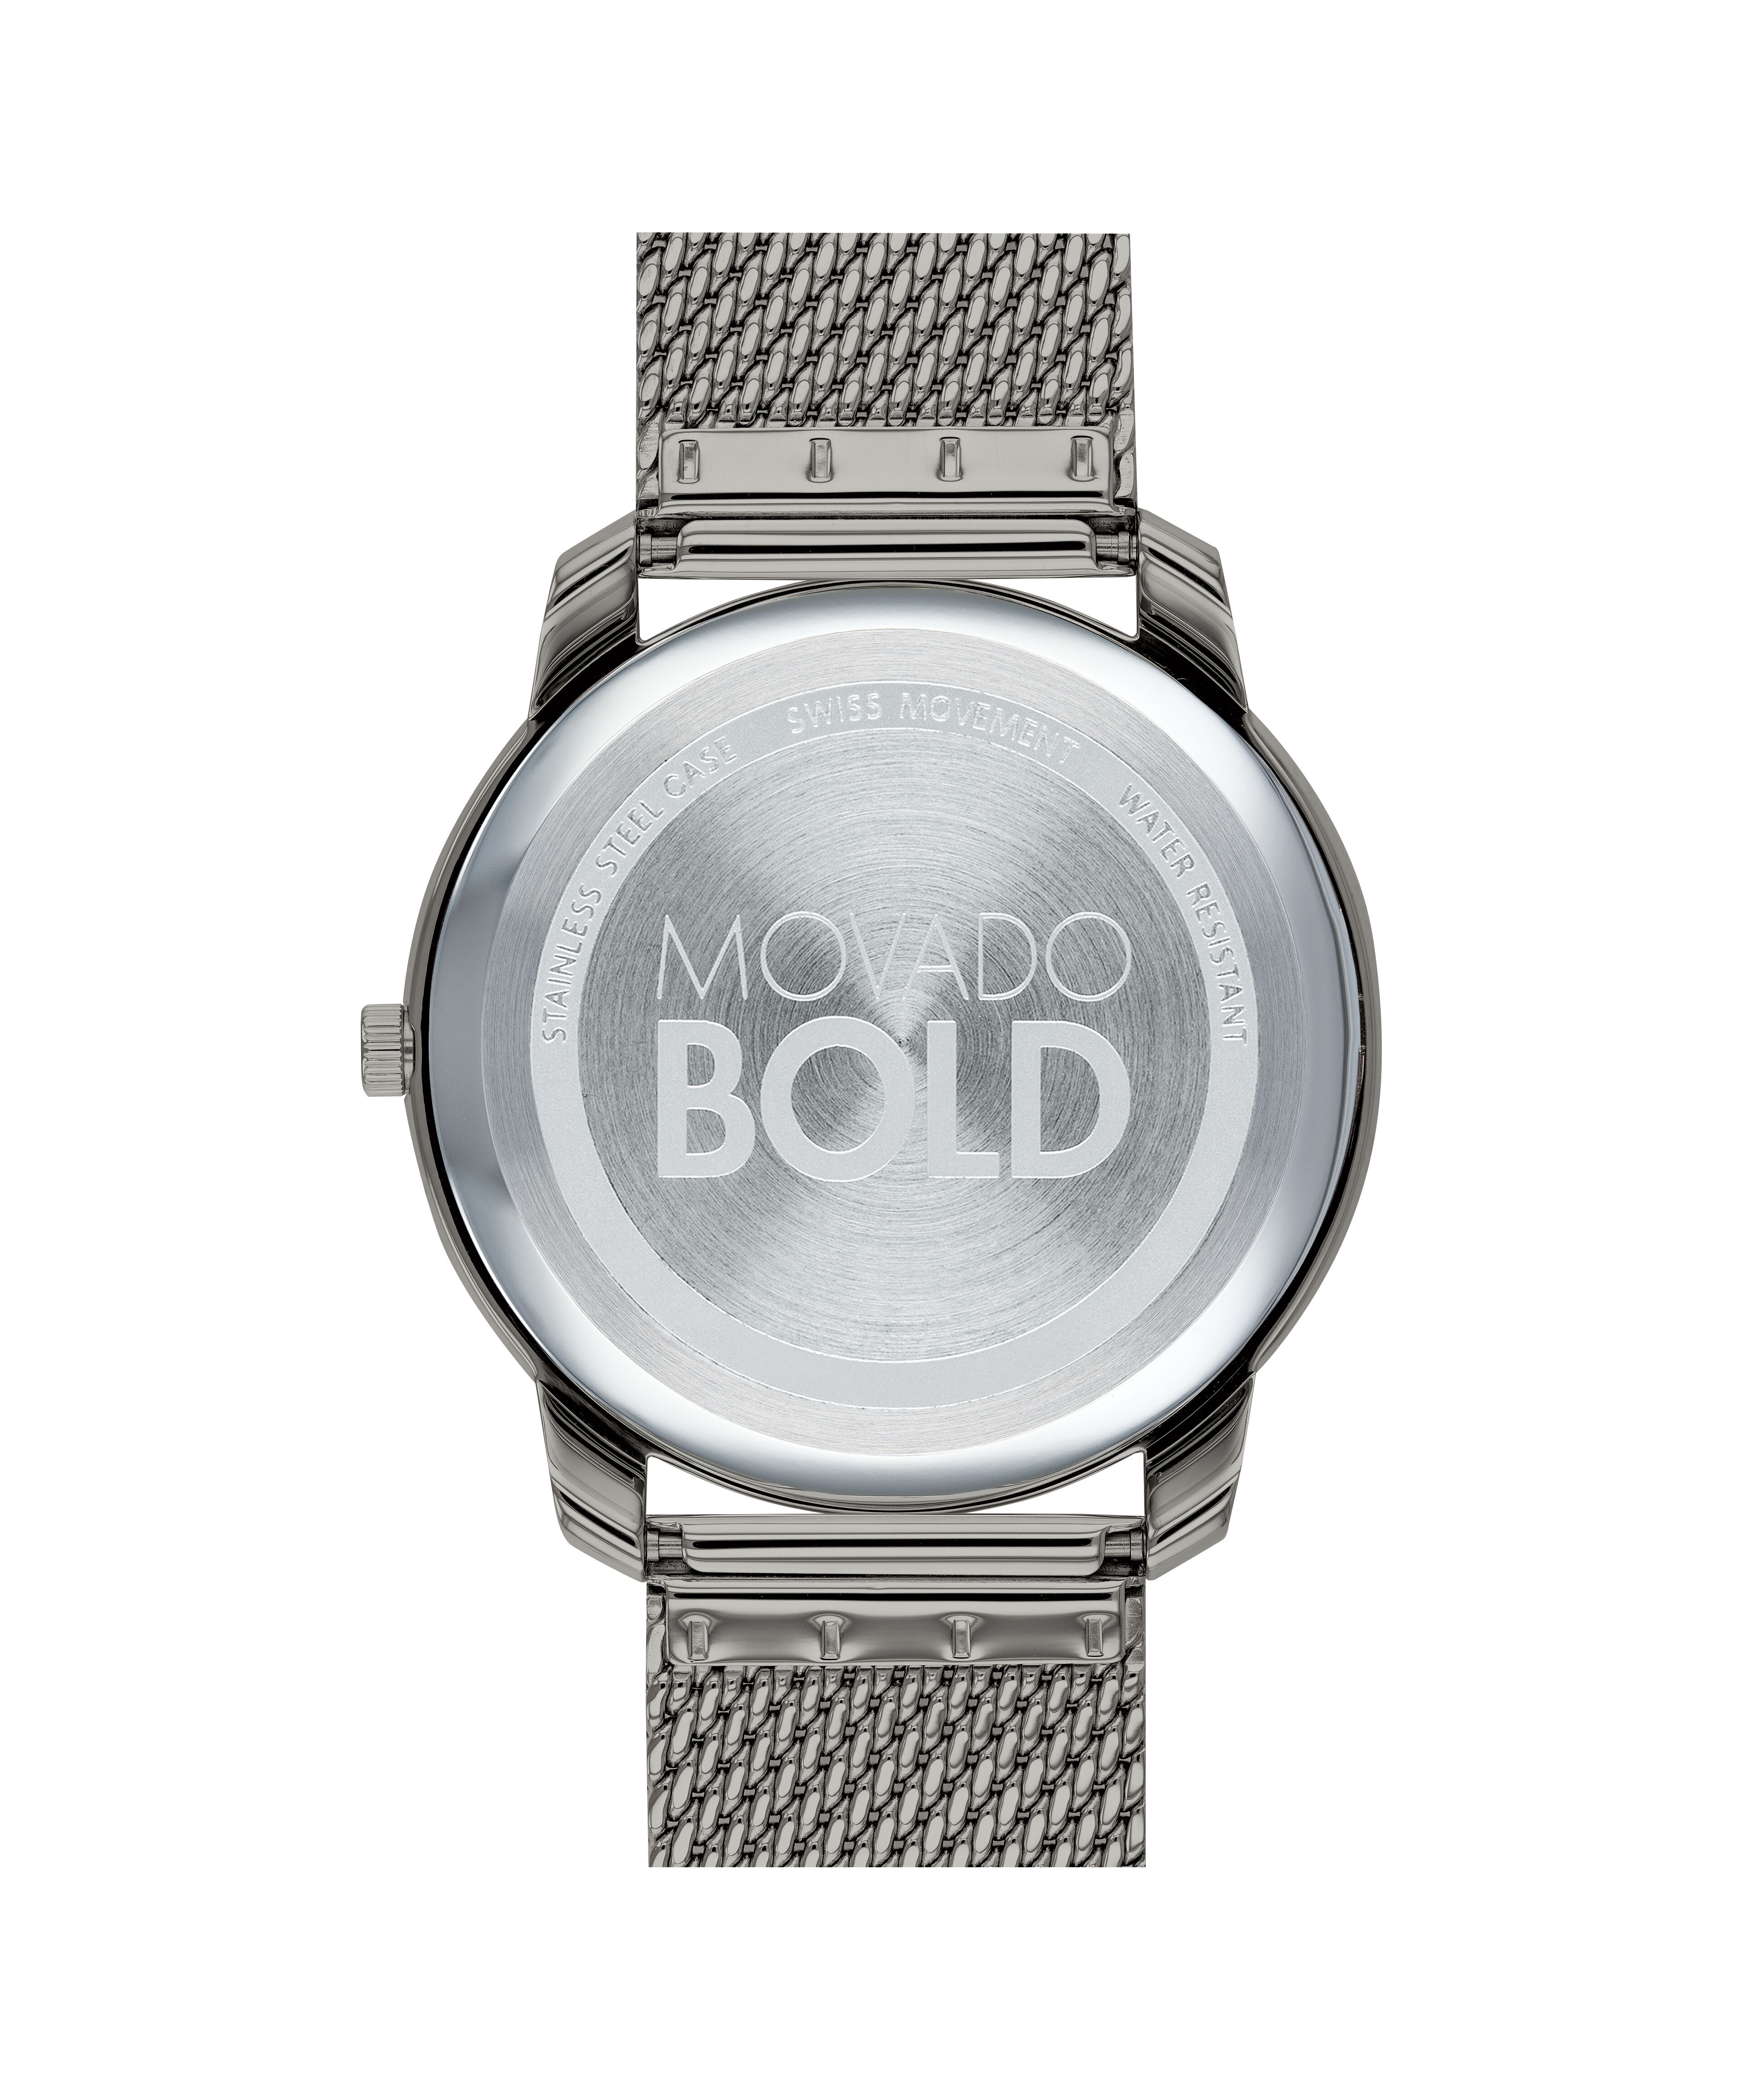 Movado Steel Watch W/ Nice Dial